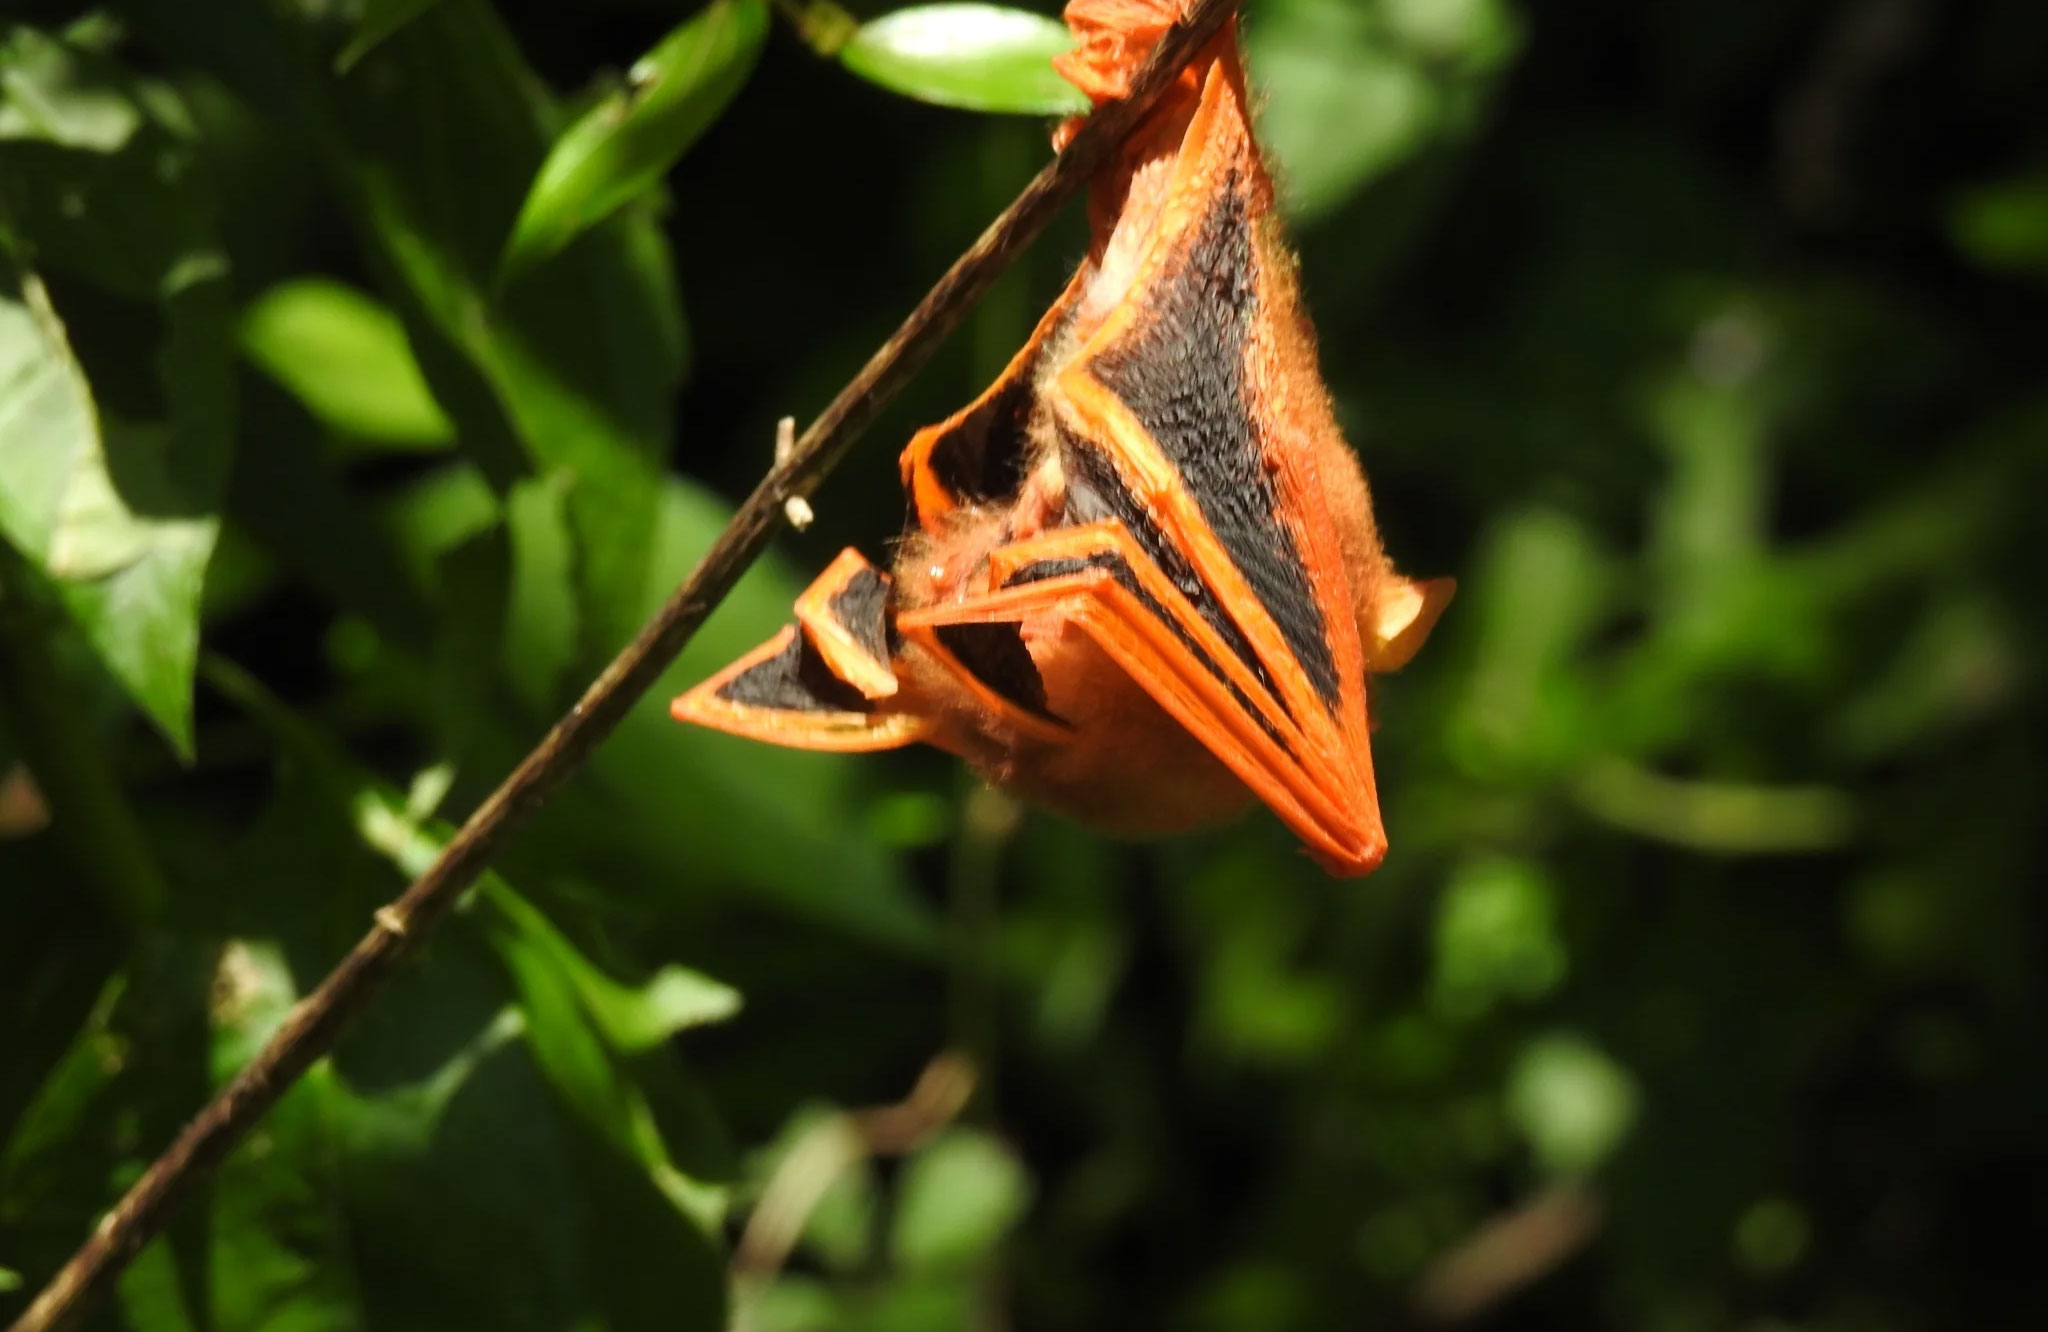 Orange bat hangs upside down from a stick